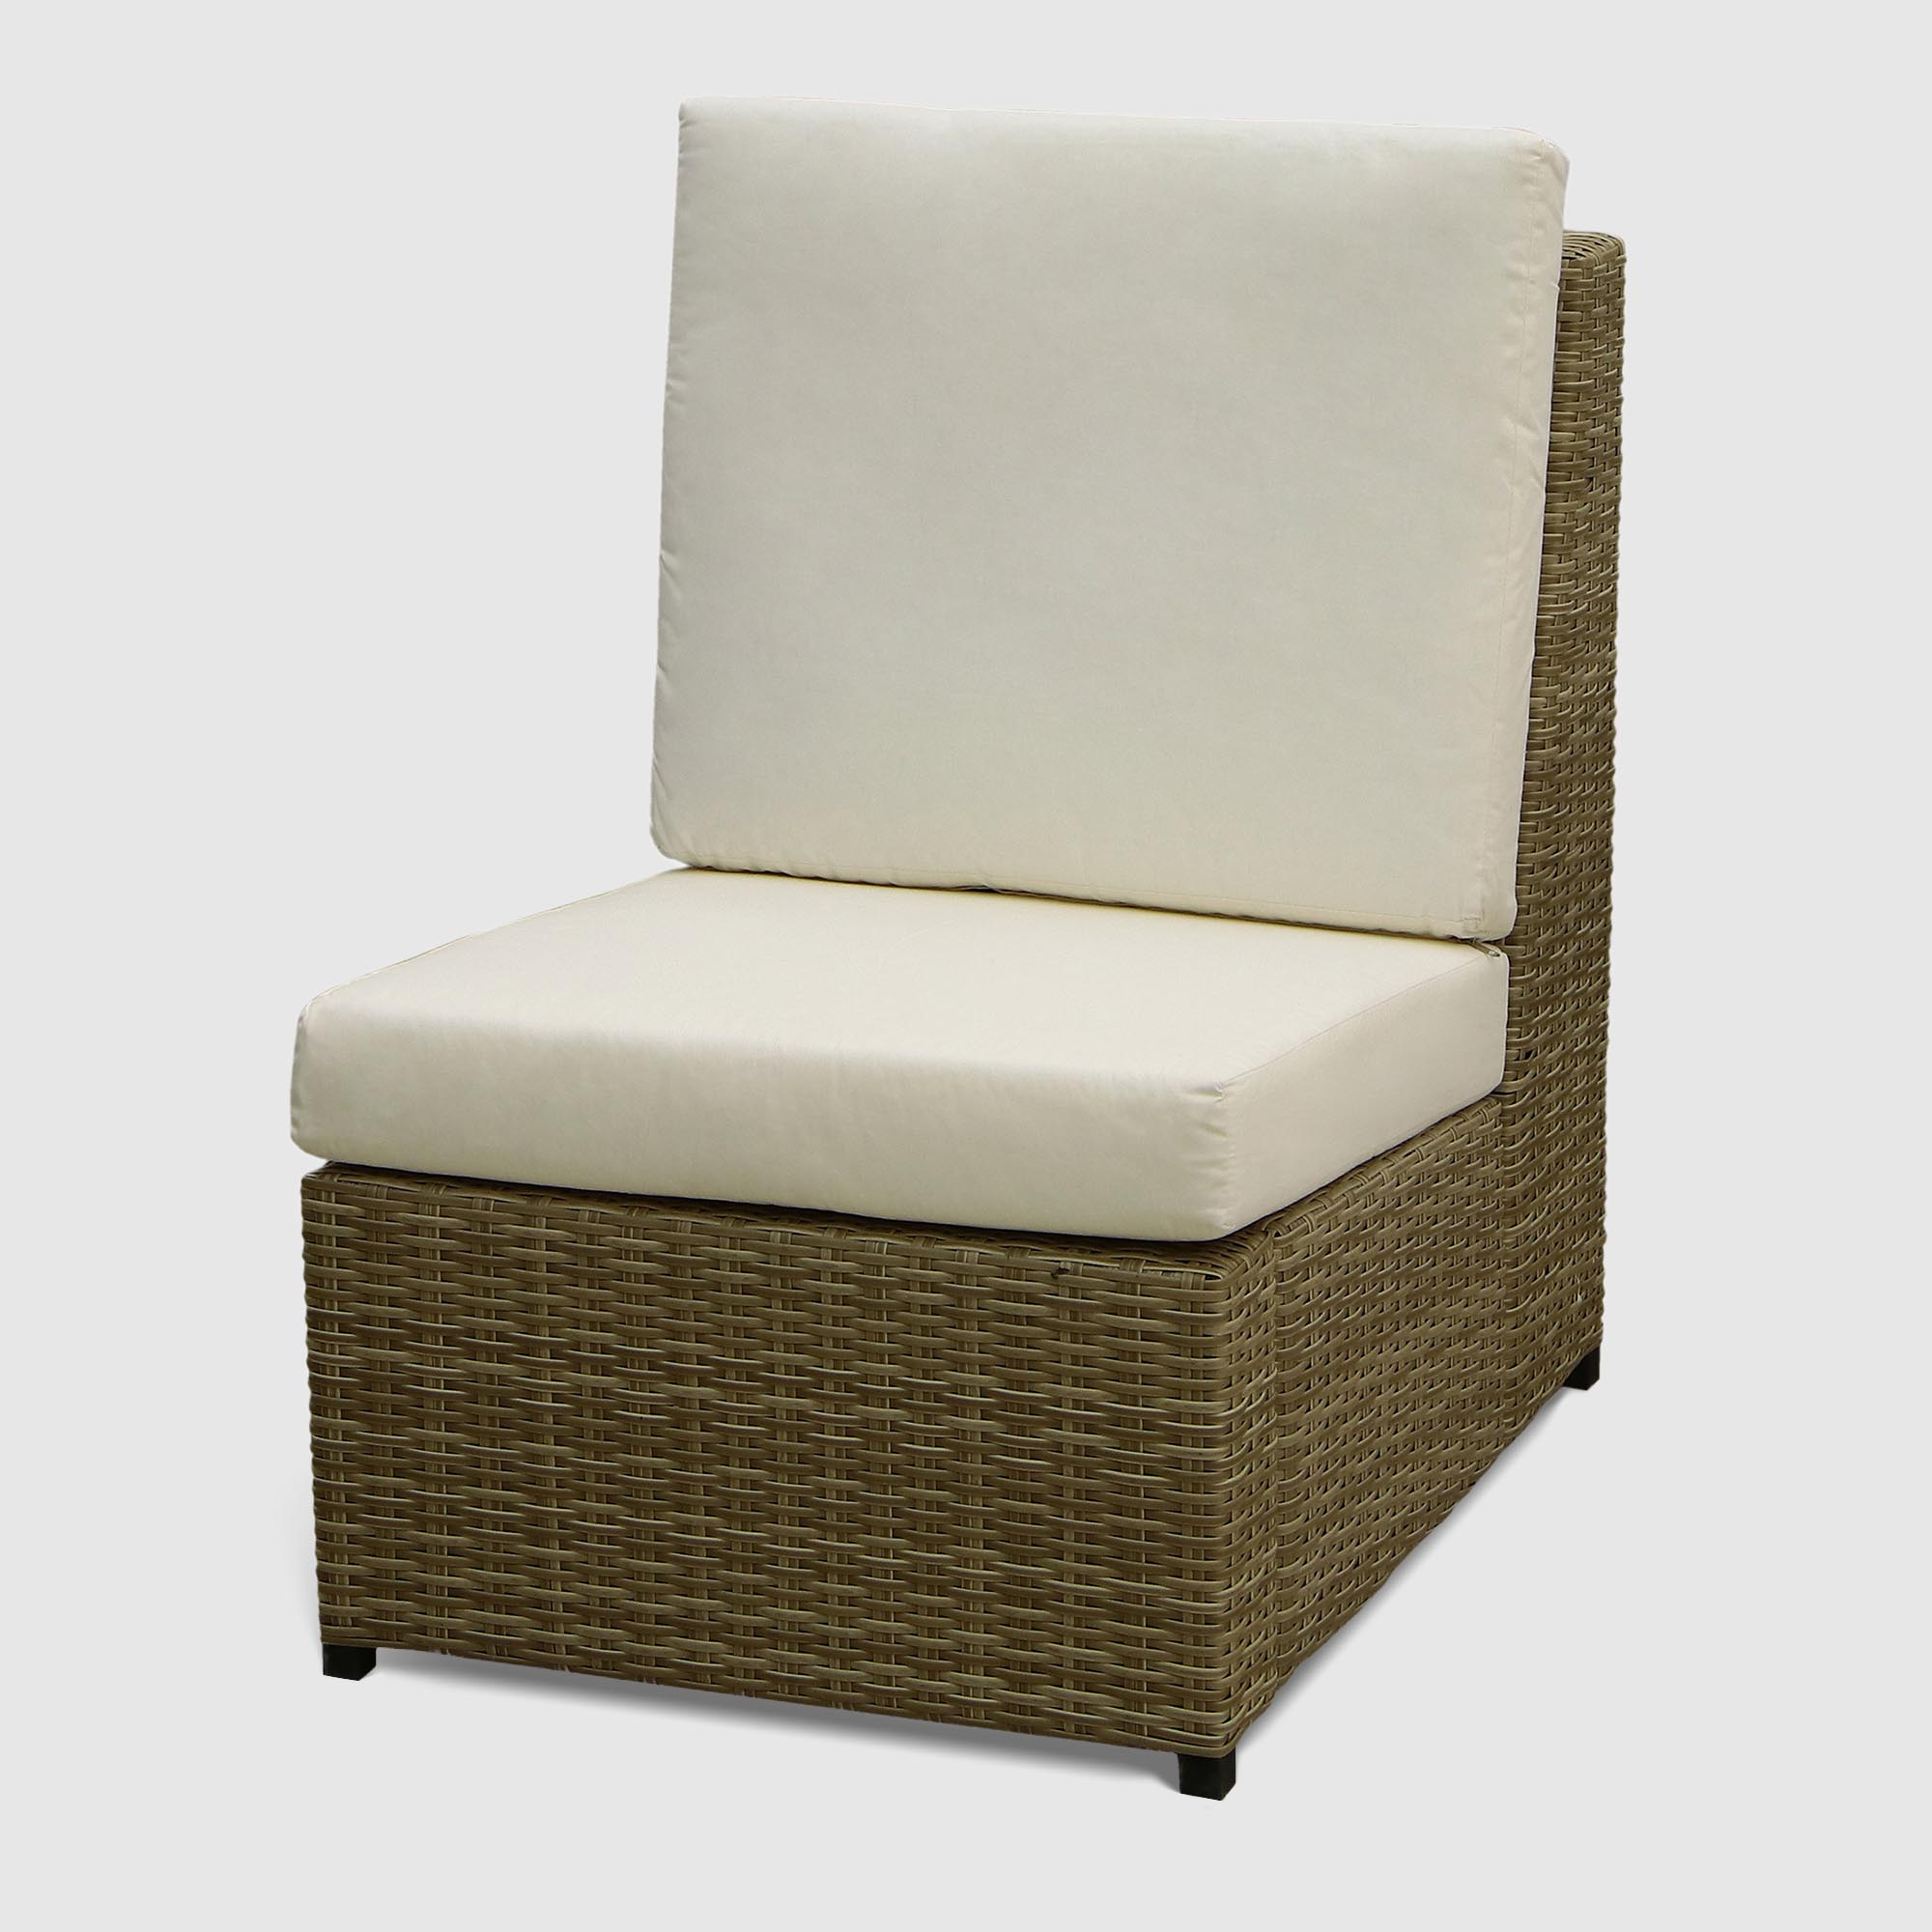 Комплект мебели Rattan grand 2 предмета, цвет коричневый, размер 220х85х82 - фото 2